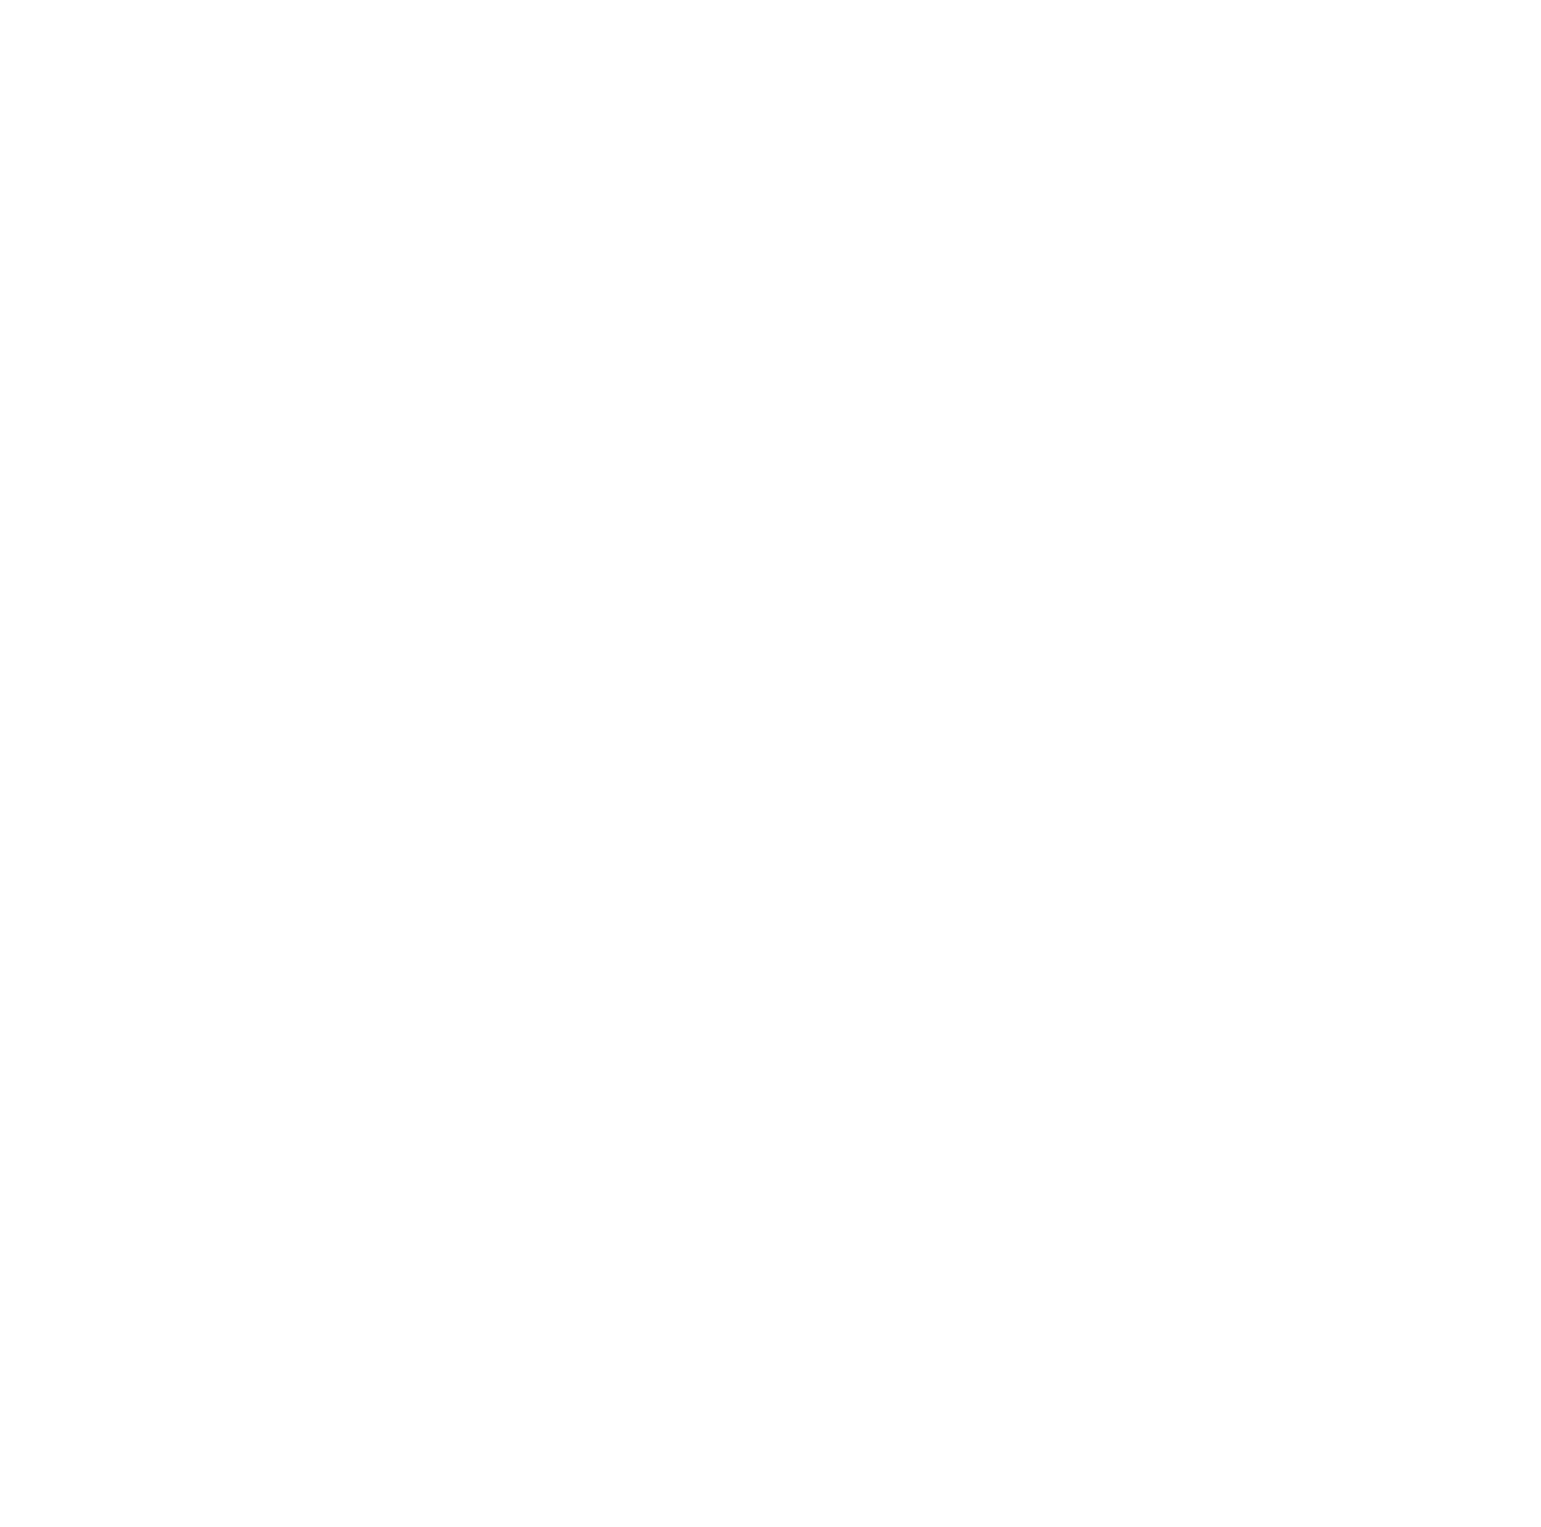 ITM Power logo for dark backgrounds (transparent PNG)